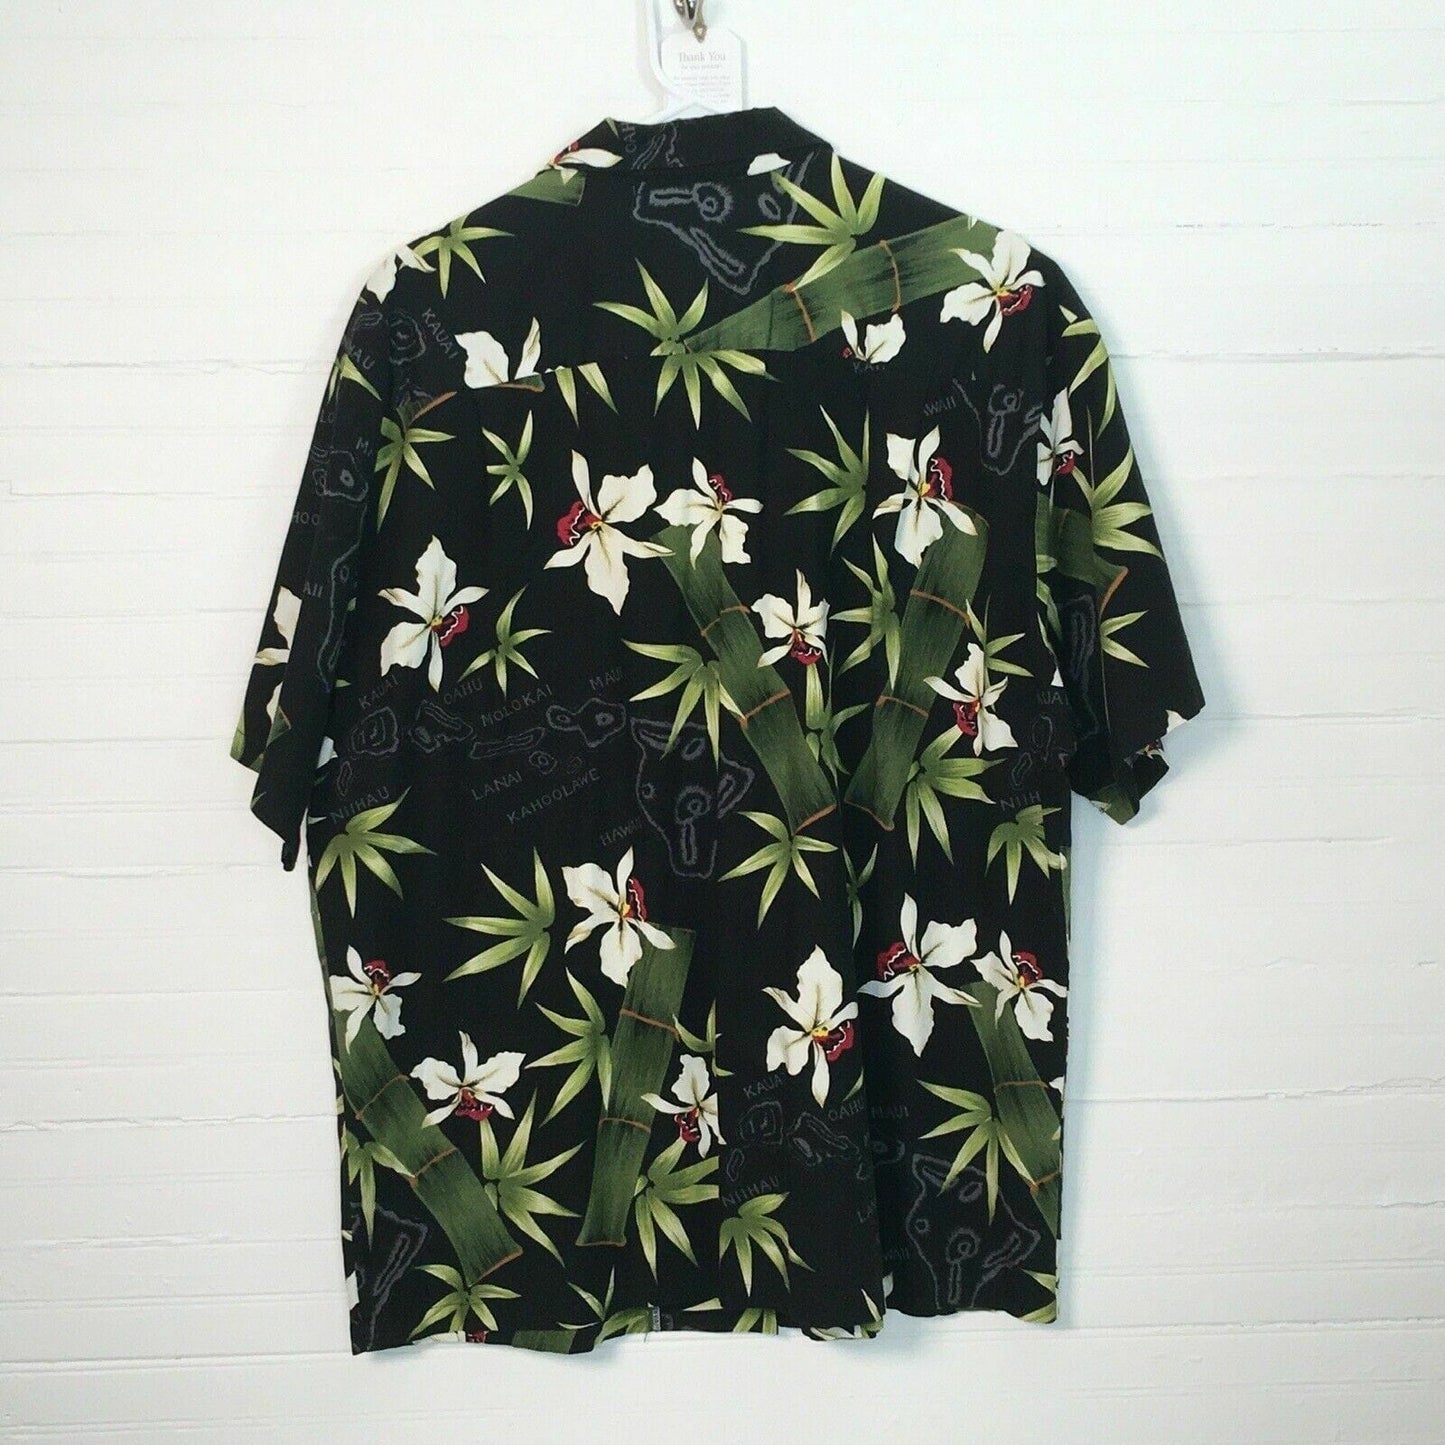 Vibrant KY’S Mens Hawaiian Shirt - XL Black